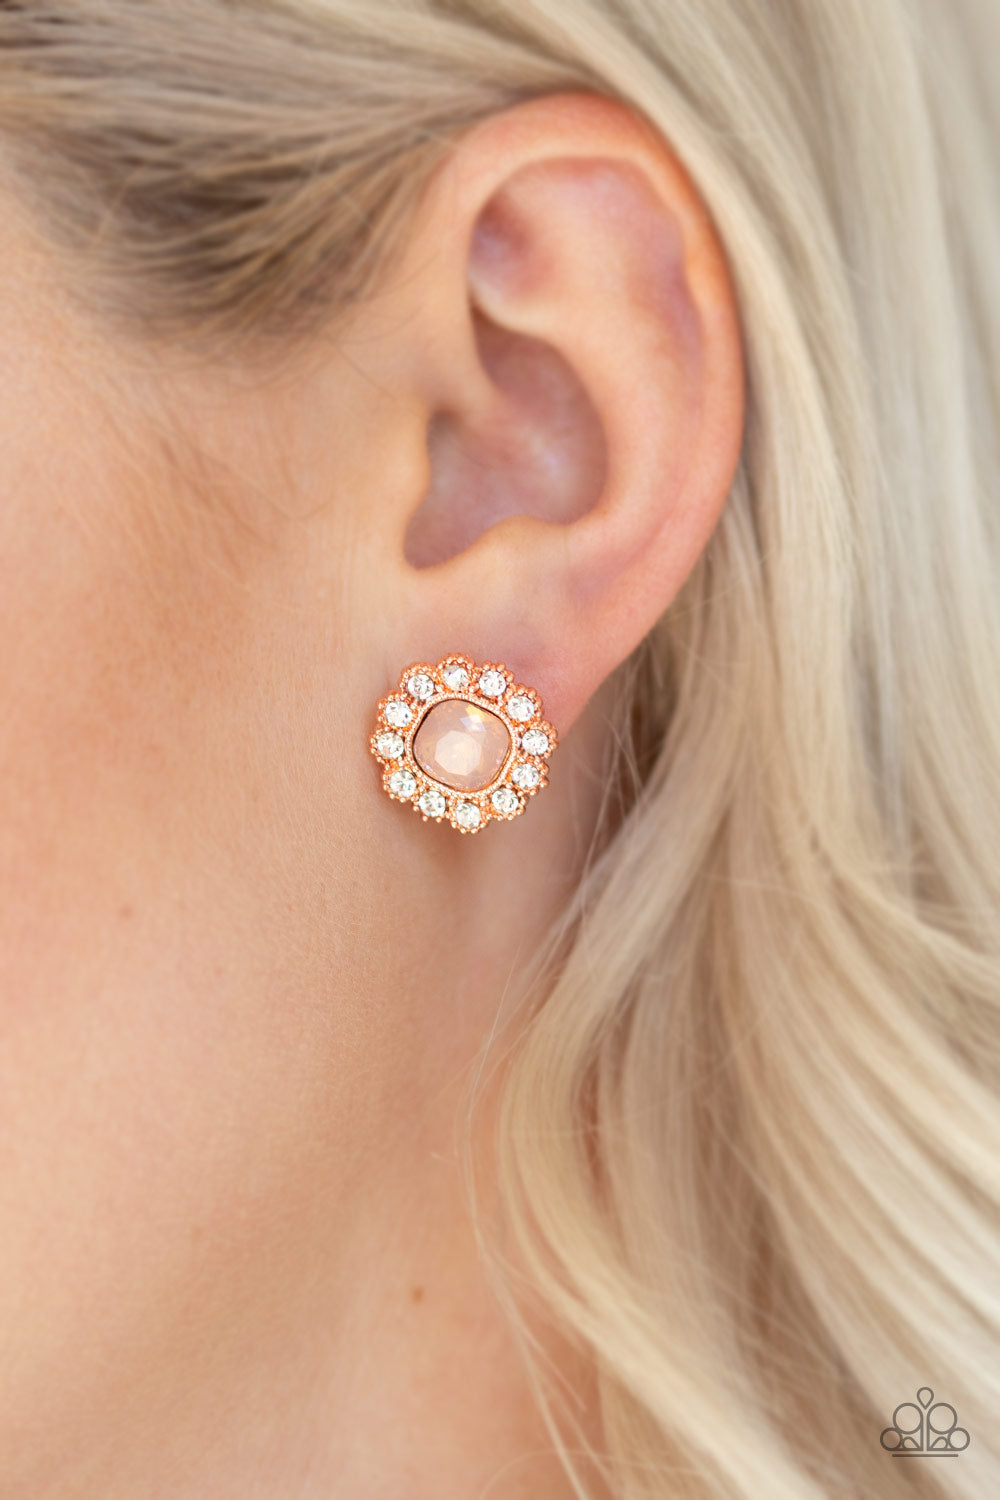 Paparazzi Little Lady - Copper - White Rhinestones - Post Earrings - $5 Jewelry with Ashley Swint